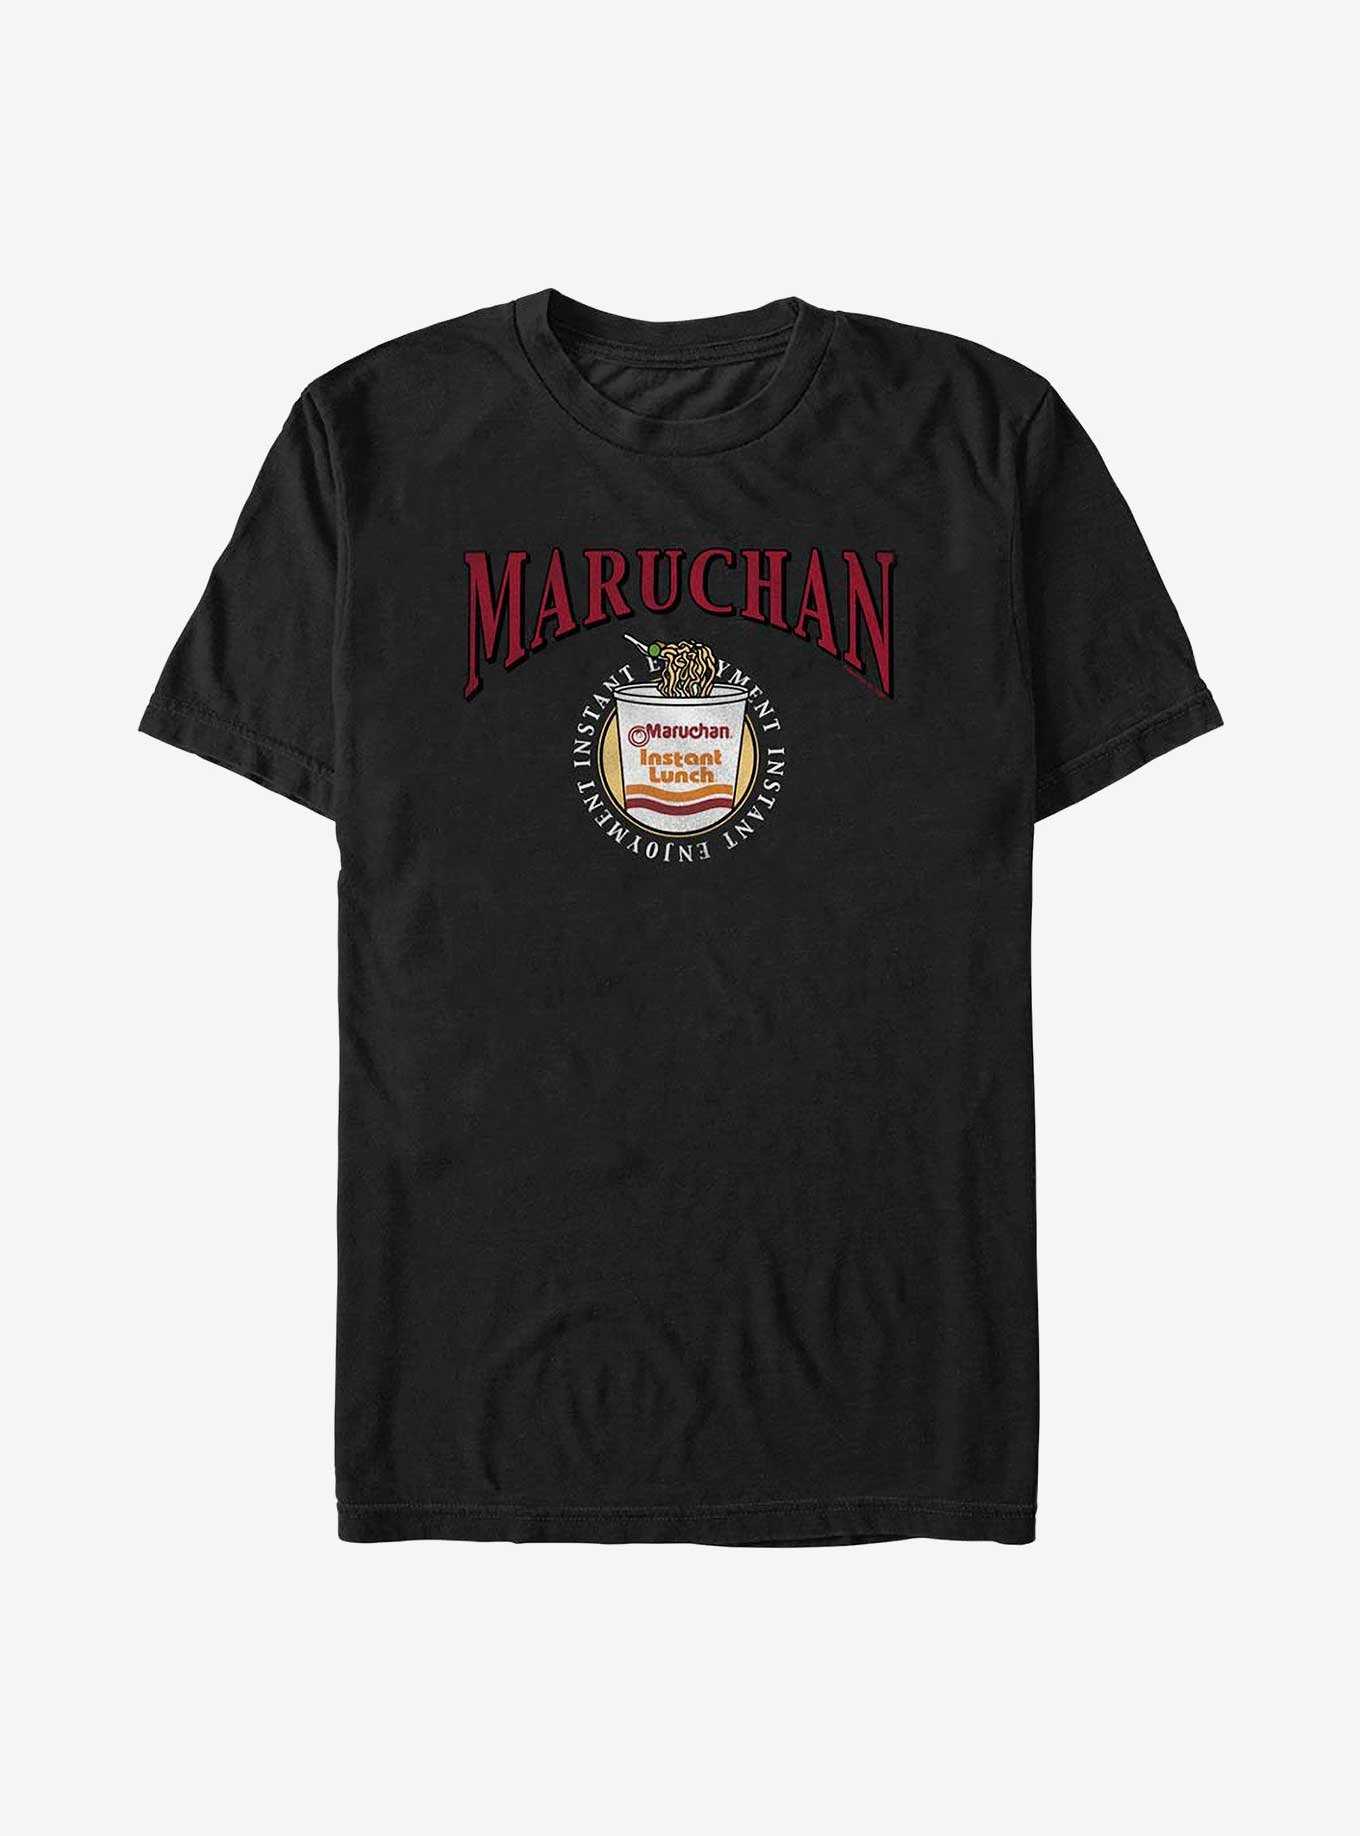 Maruchan Instant Enjoyment T-Shirt, , hi-res